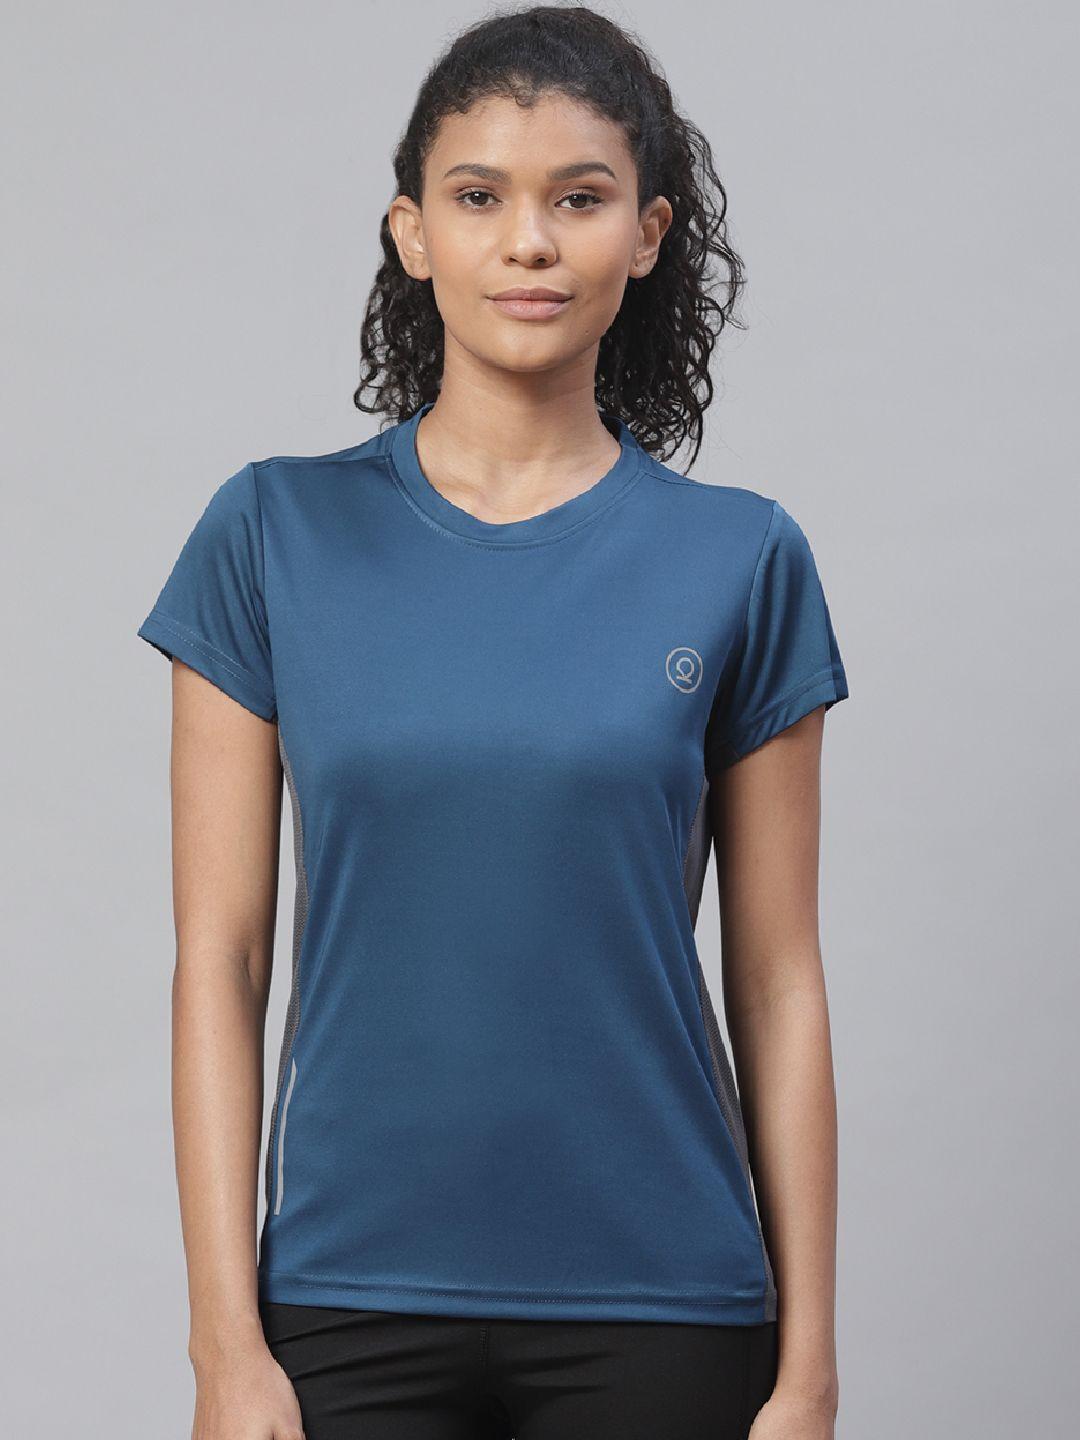 chkokko women teal blue solid round neck yoga t-shirt